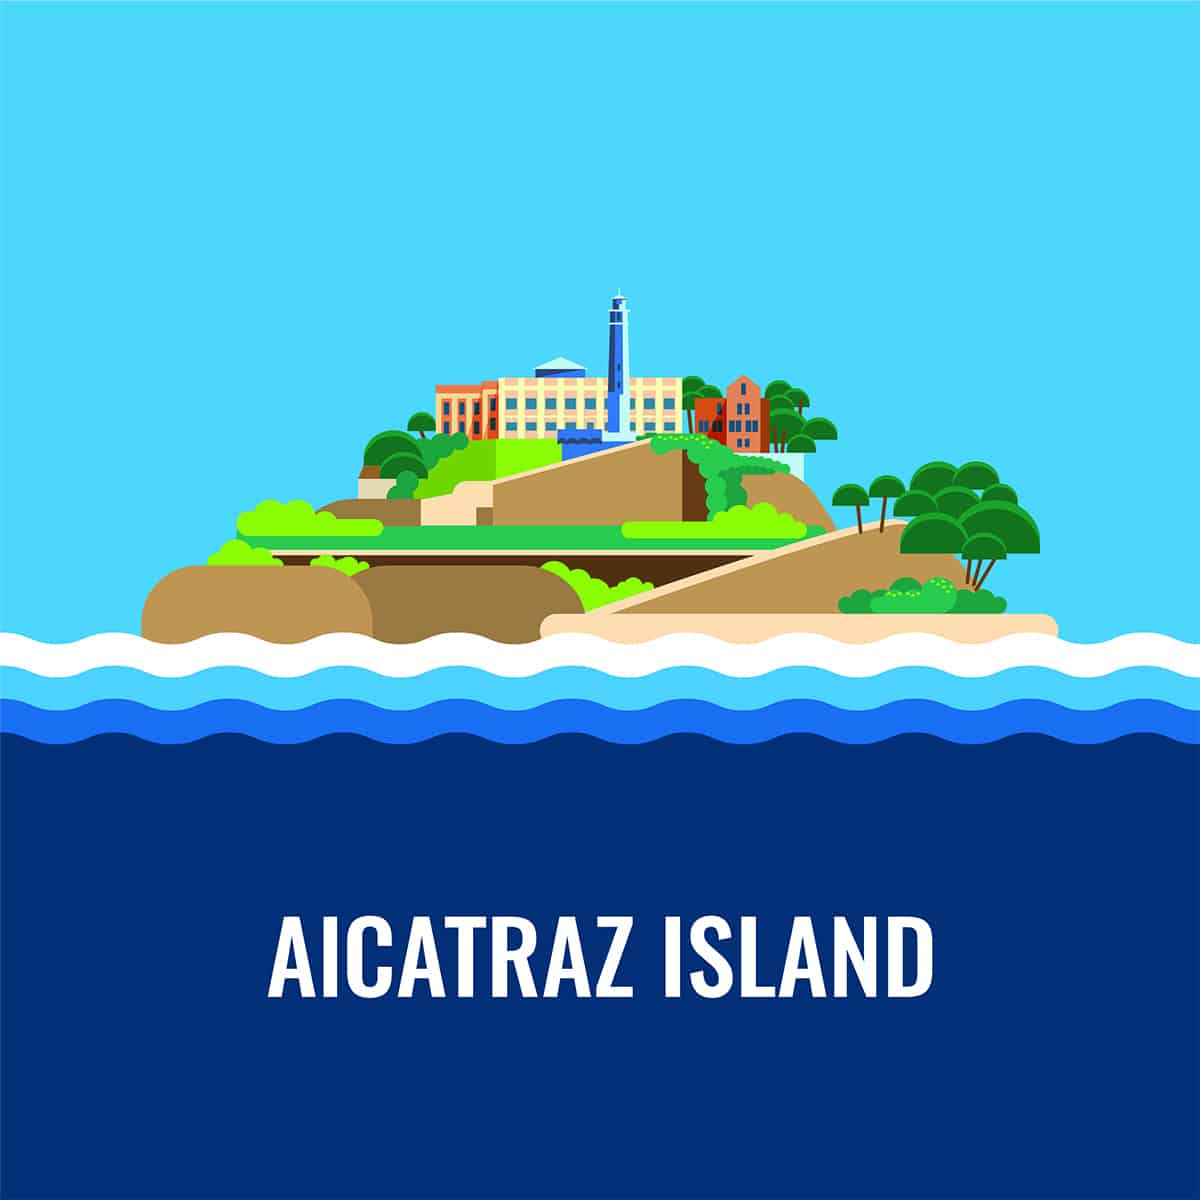 Half of Alcatraz Island